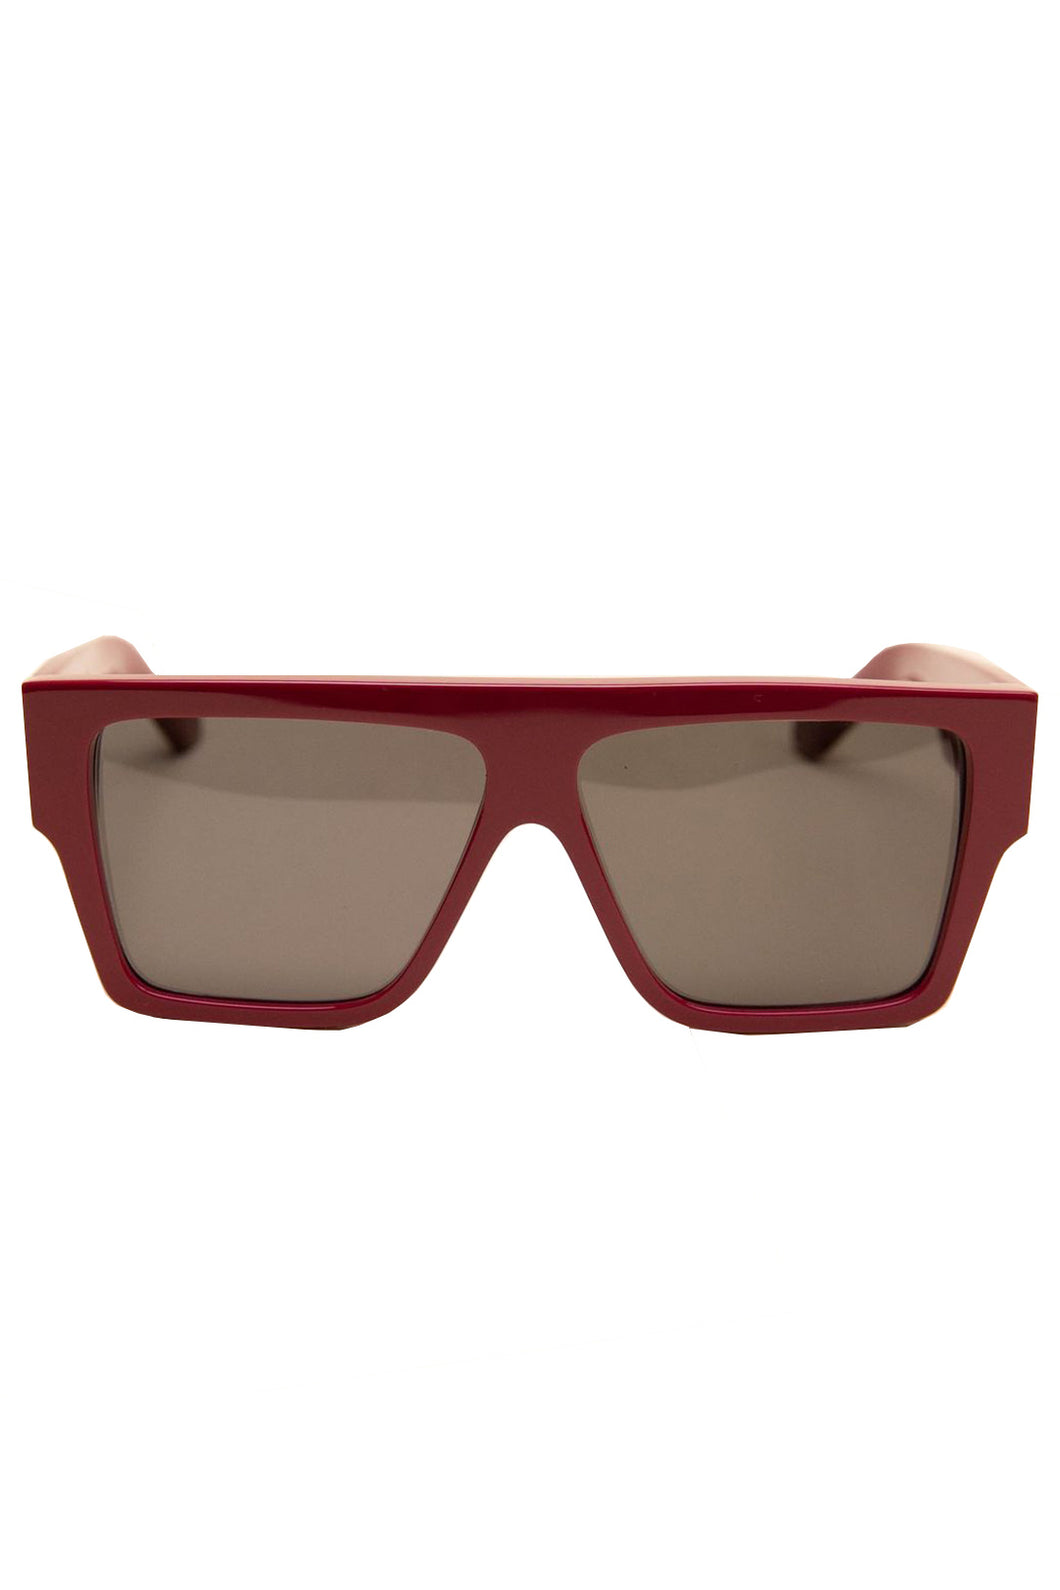 Lazer sunglasses by TOL Eyewear